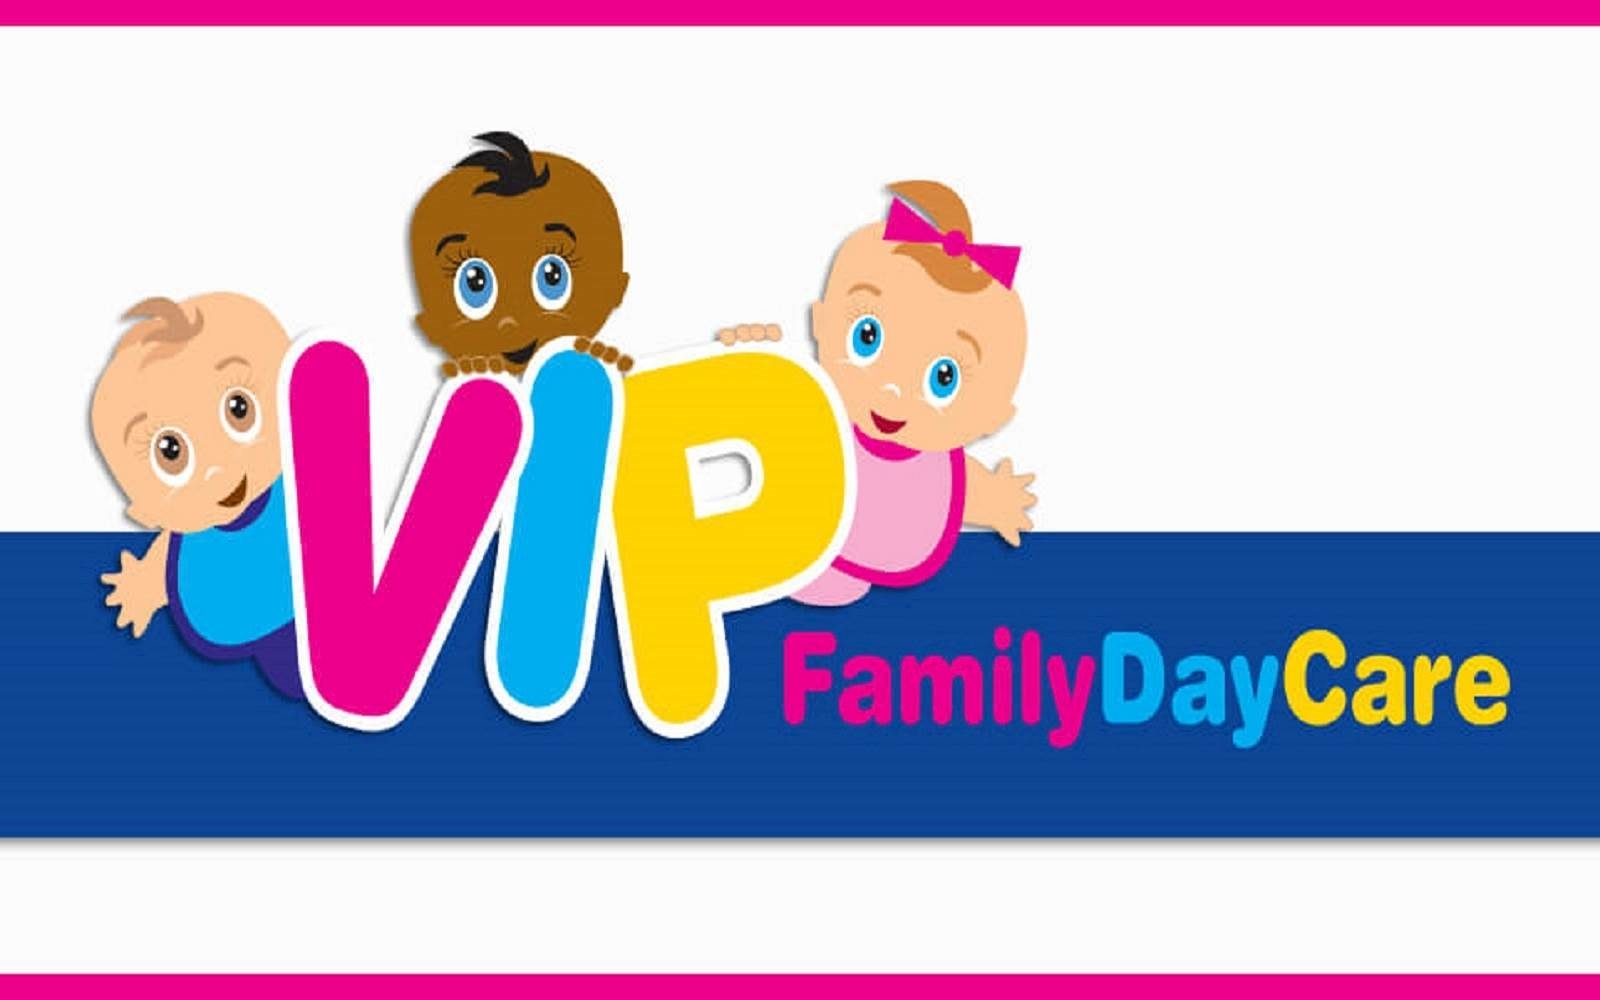 V.I.P. Family Day Care Scheme